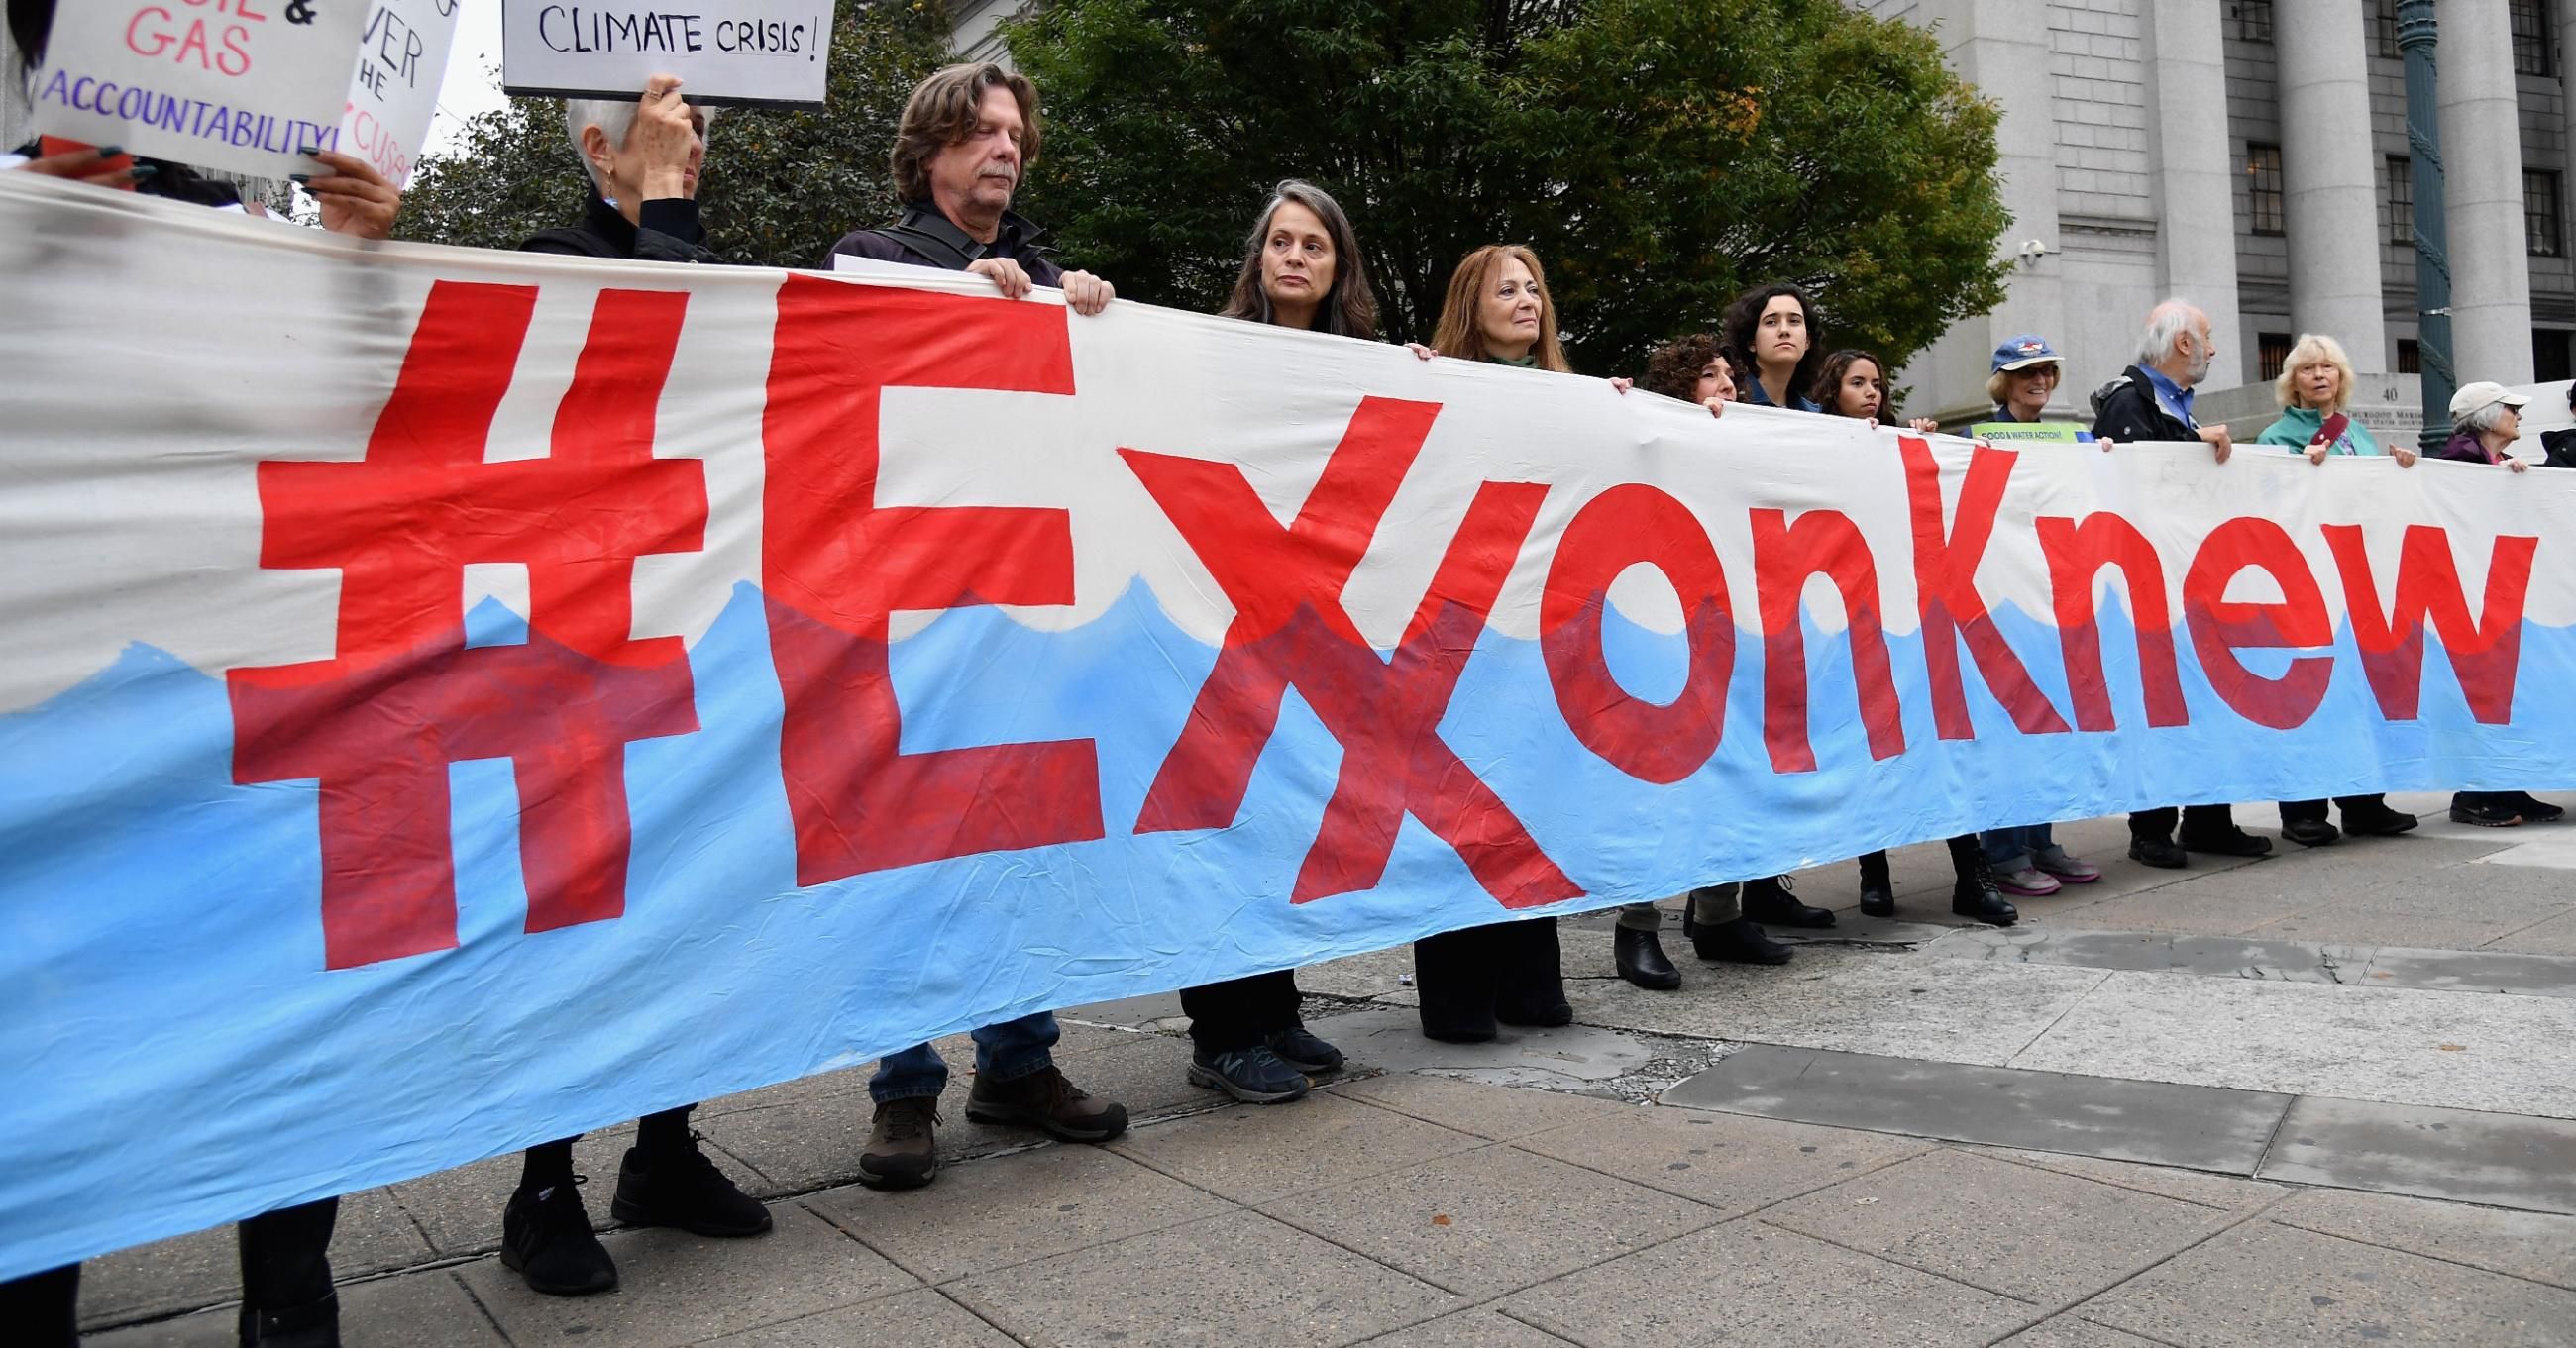 #ExxonKnew sign in NYC in 2019